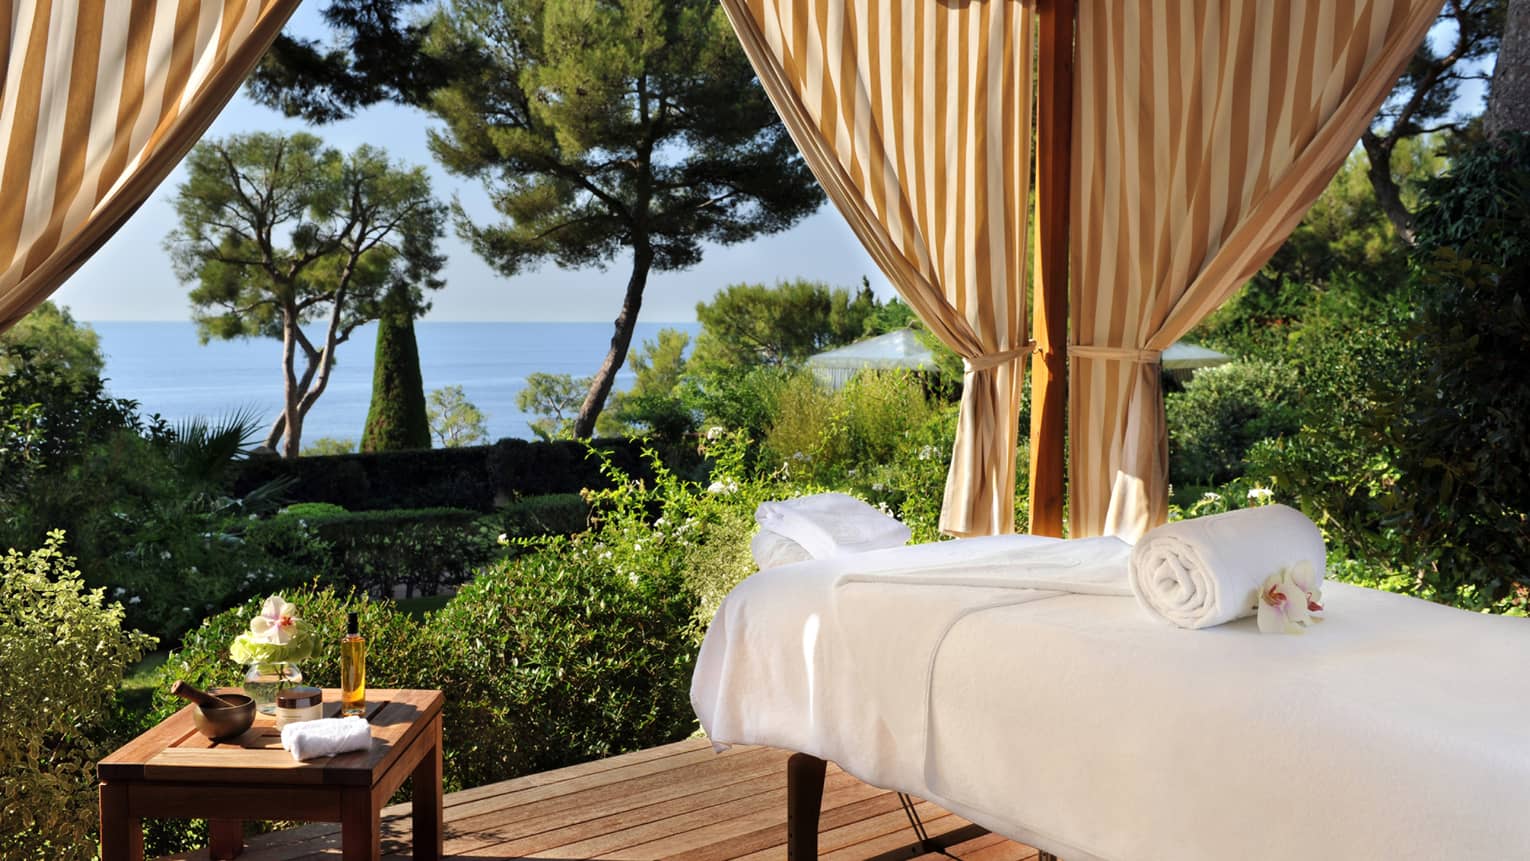 Massage bed on outdoor Spa pavilion overlooking gardens, sea